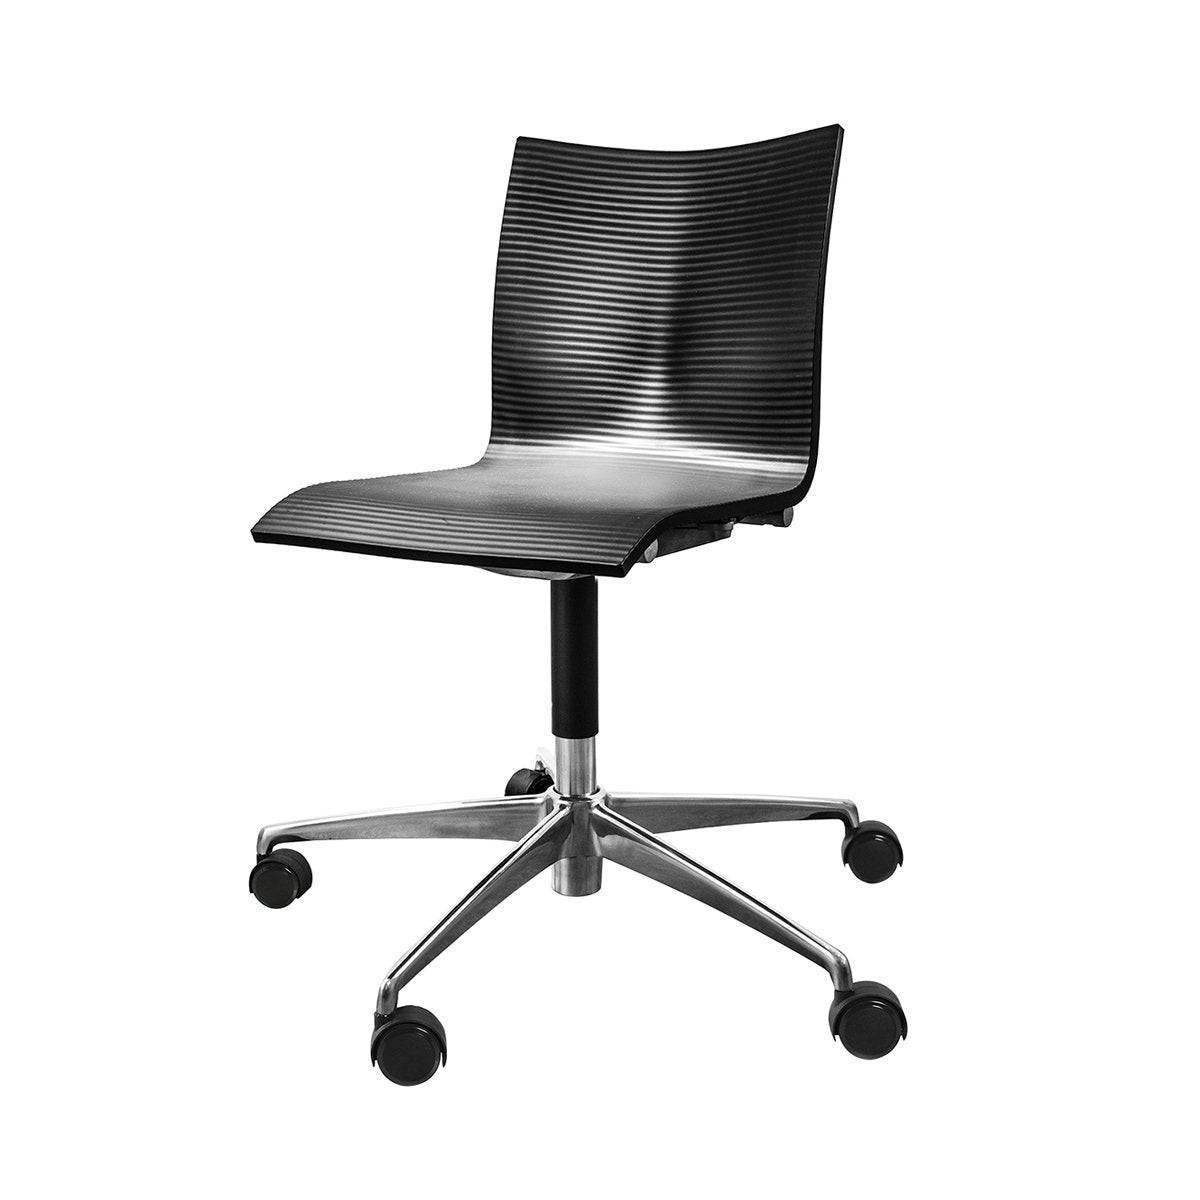 Chairik XL 134 Chair: 5-Star Swivel Base